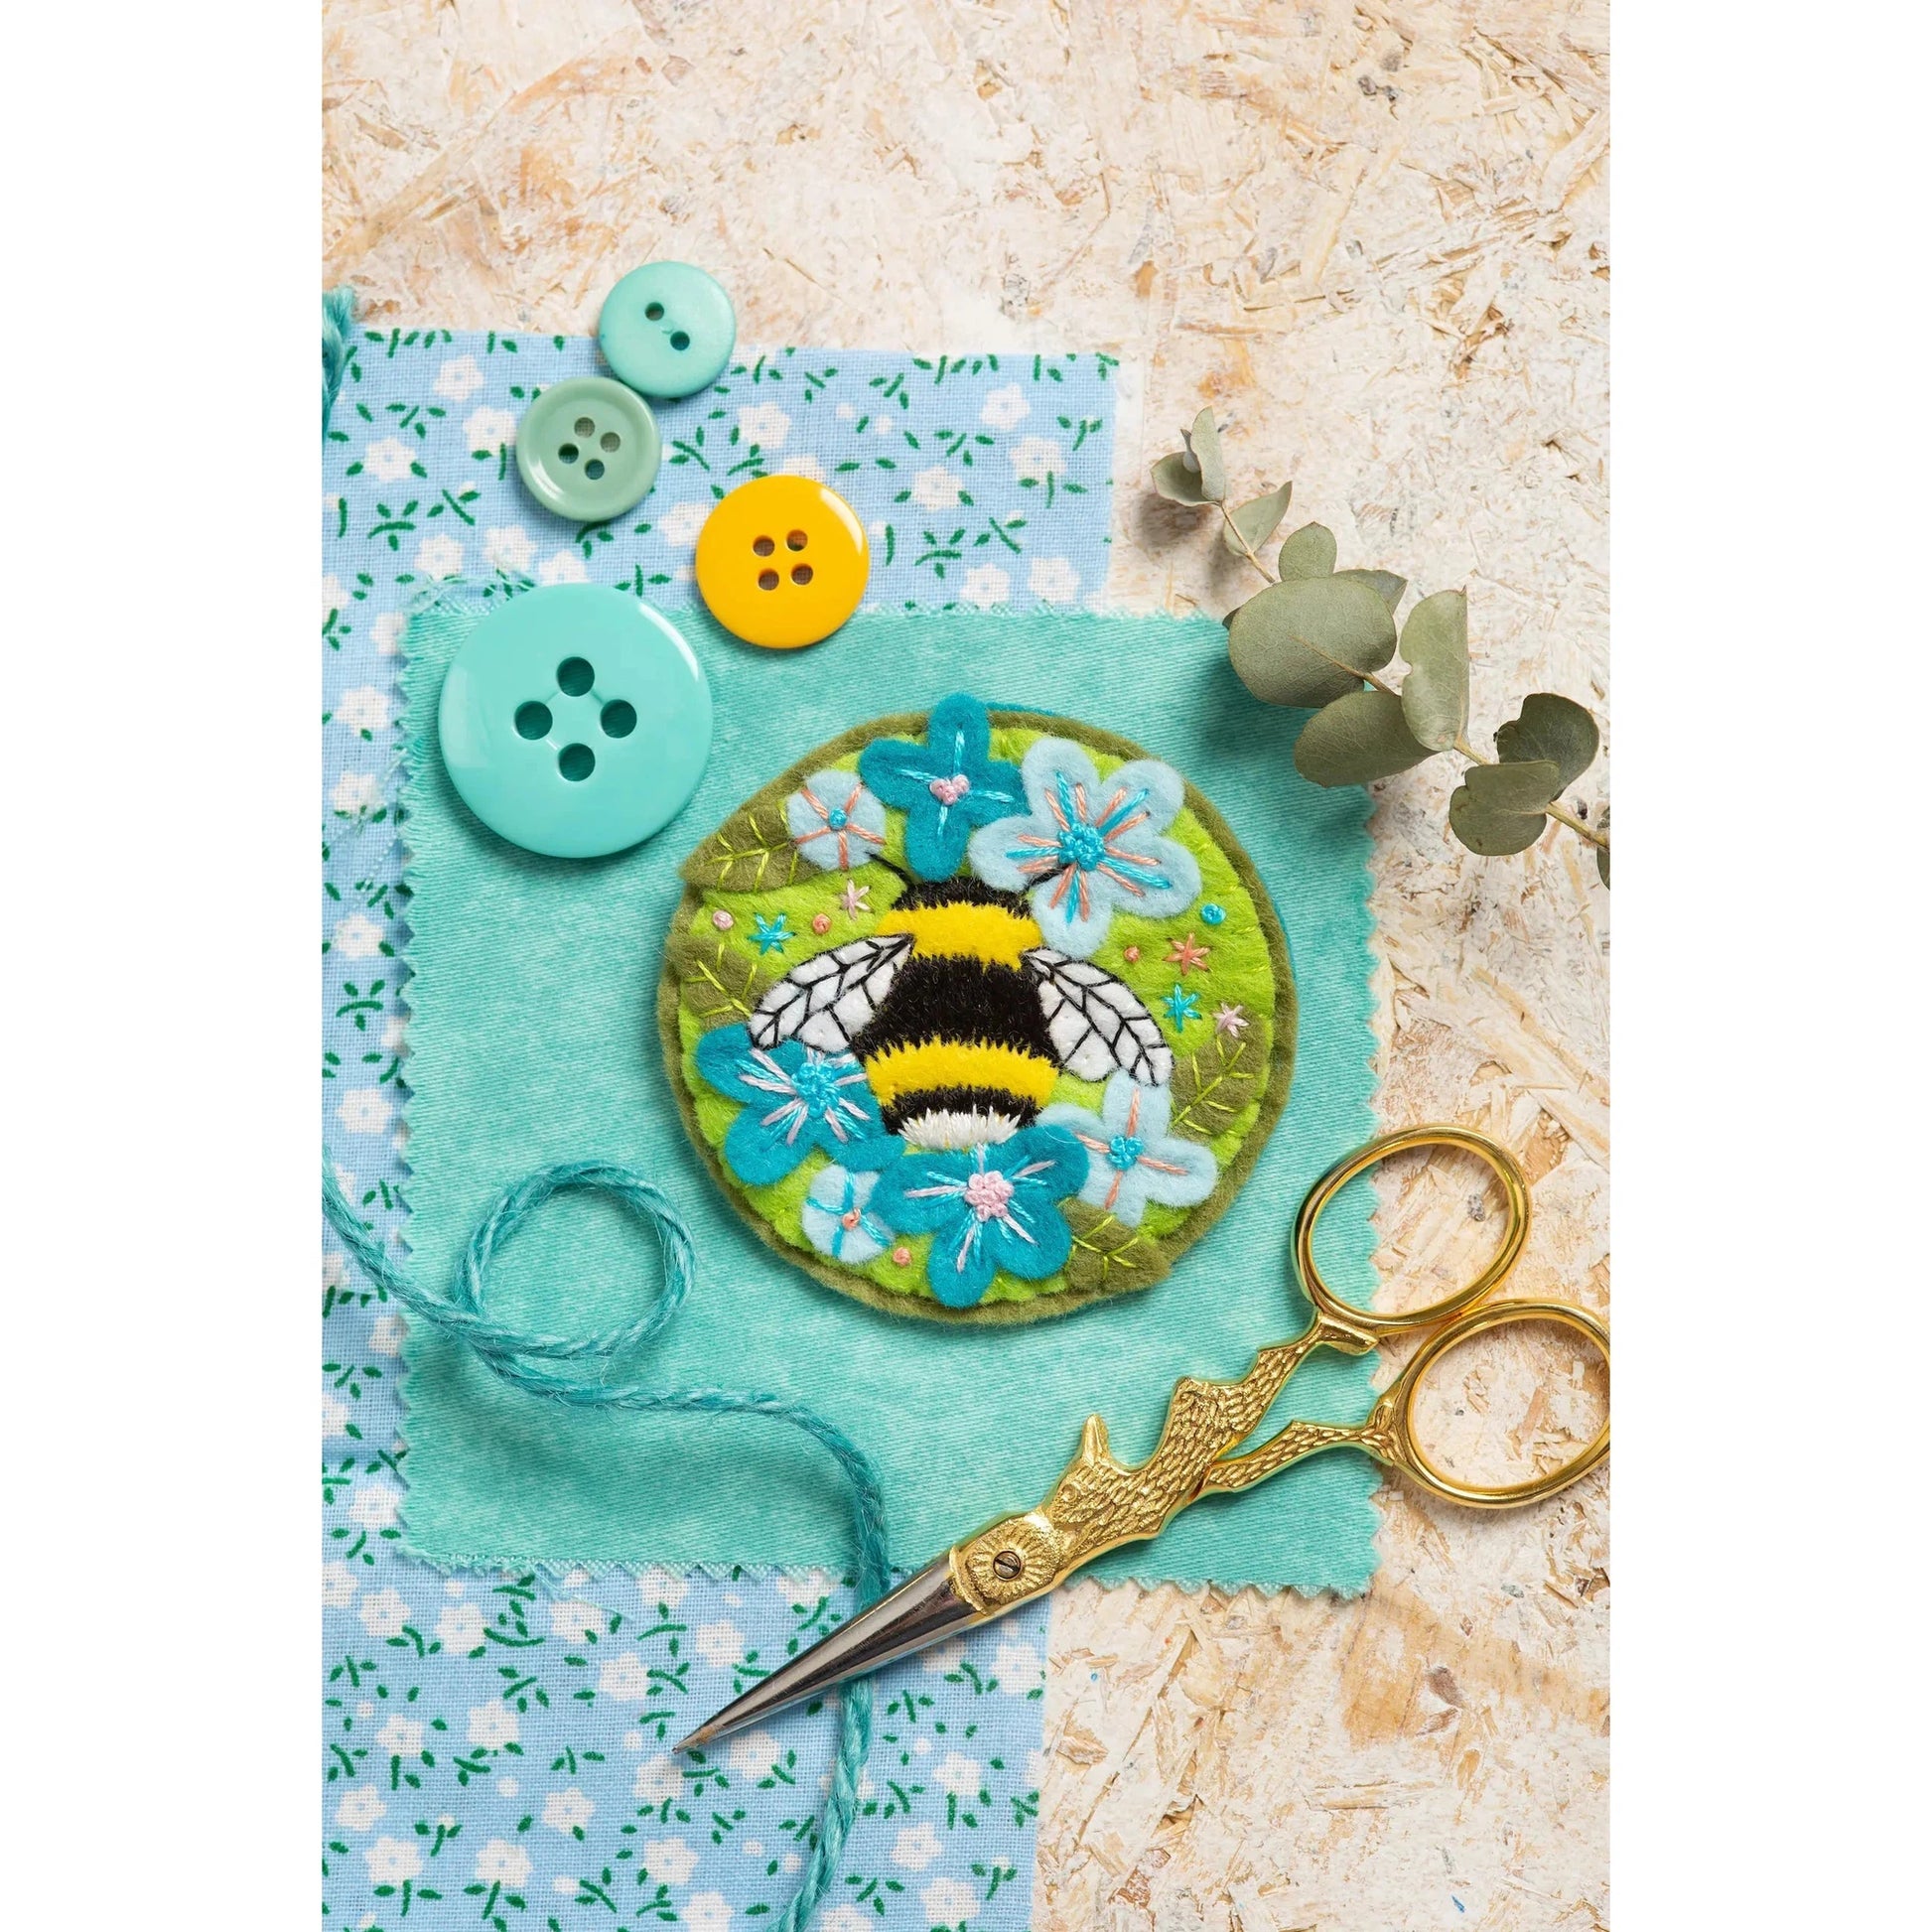 Bumblebee Brooch Felt Craft Kit - Hawthorn Handmade - Felt Craft Kit